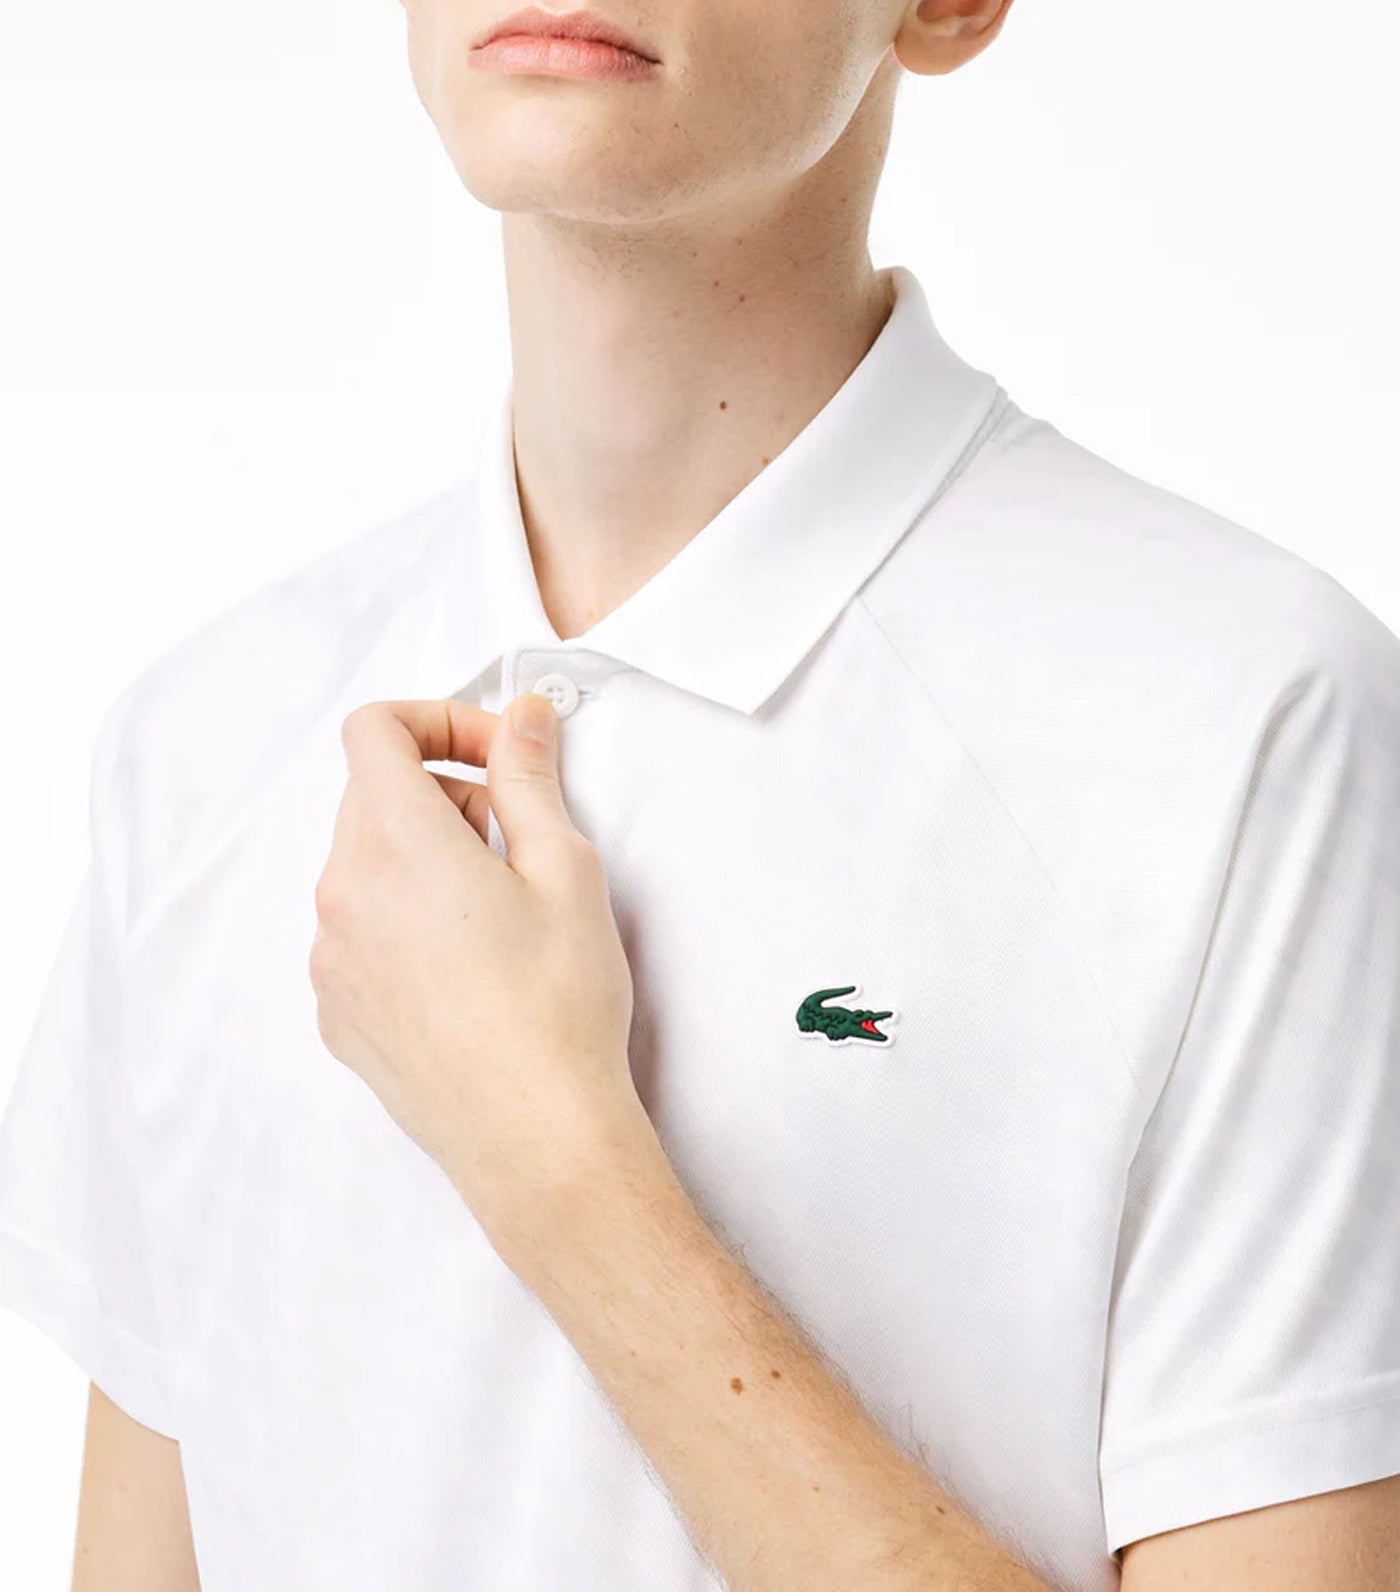 Men’s Lacoste Tennis x Novak Djokovic Printed Polo Shirt White